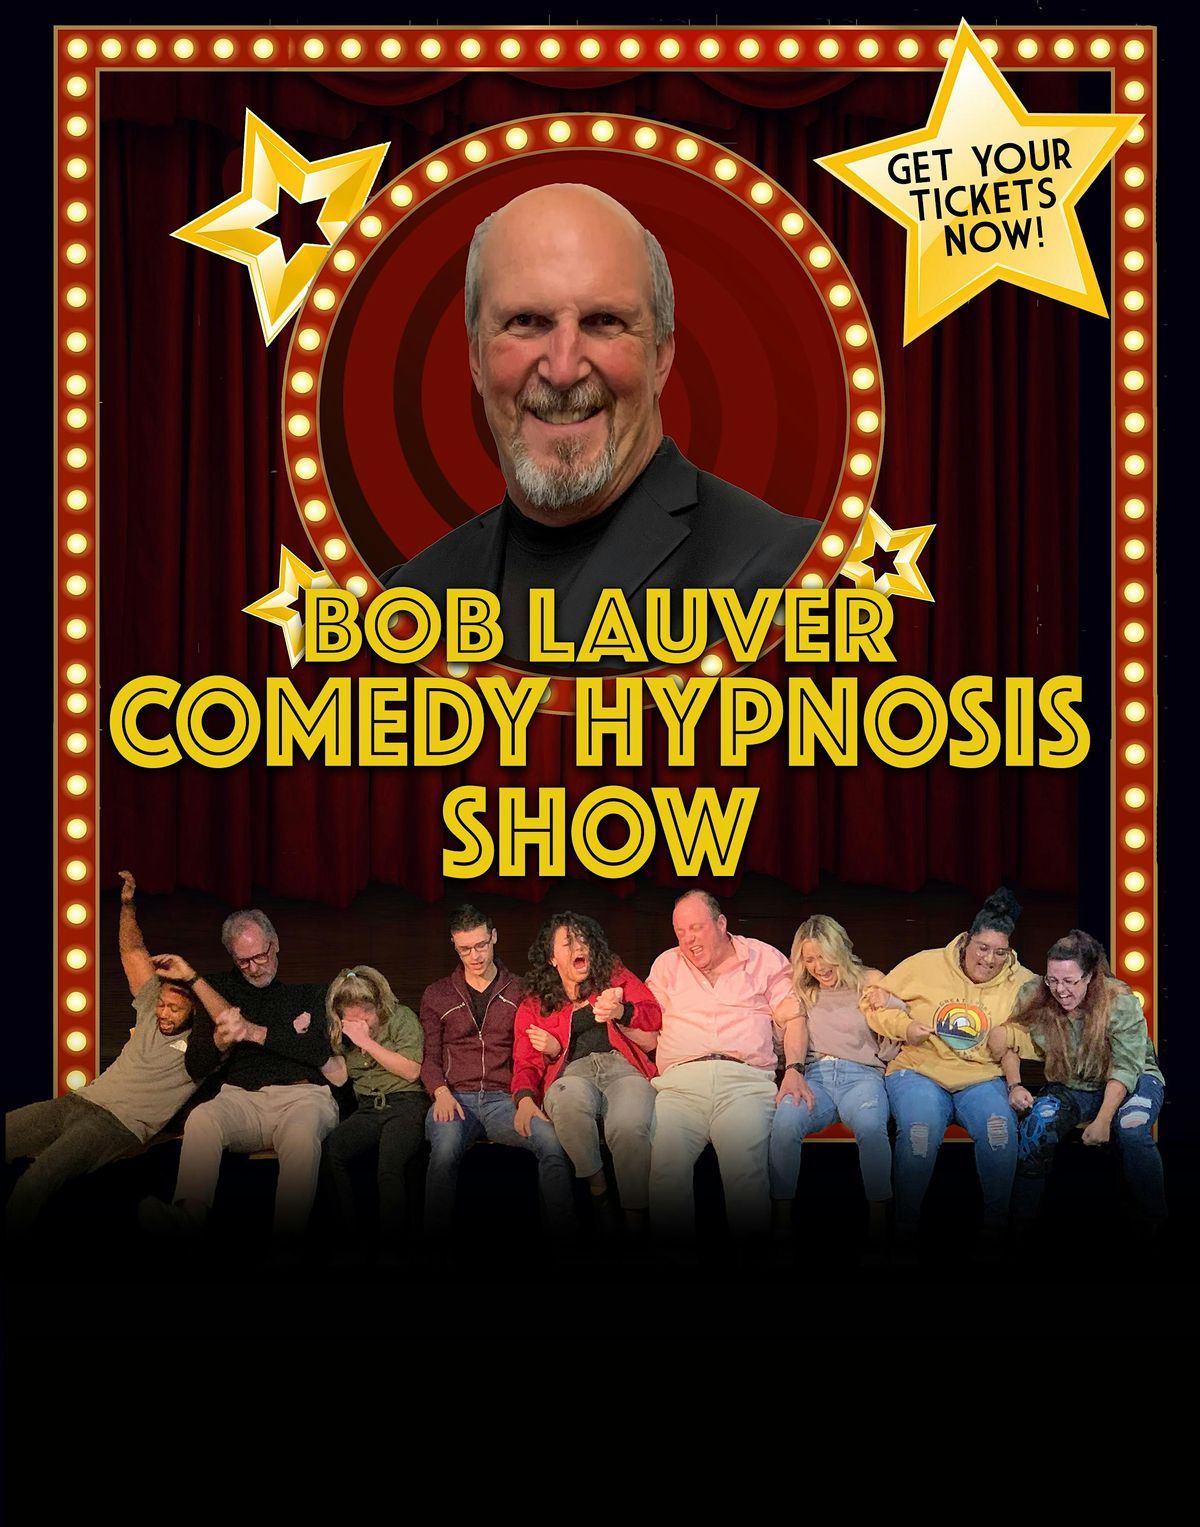 Cape Coral Comedy Hypnosis Show